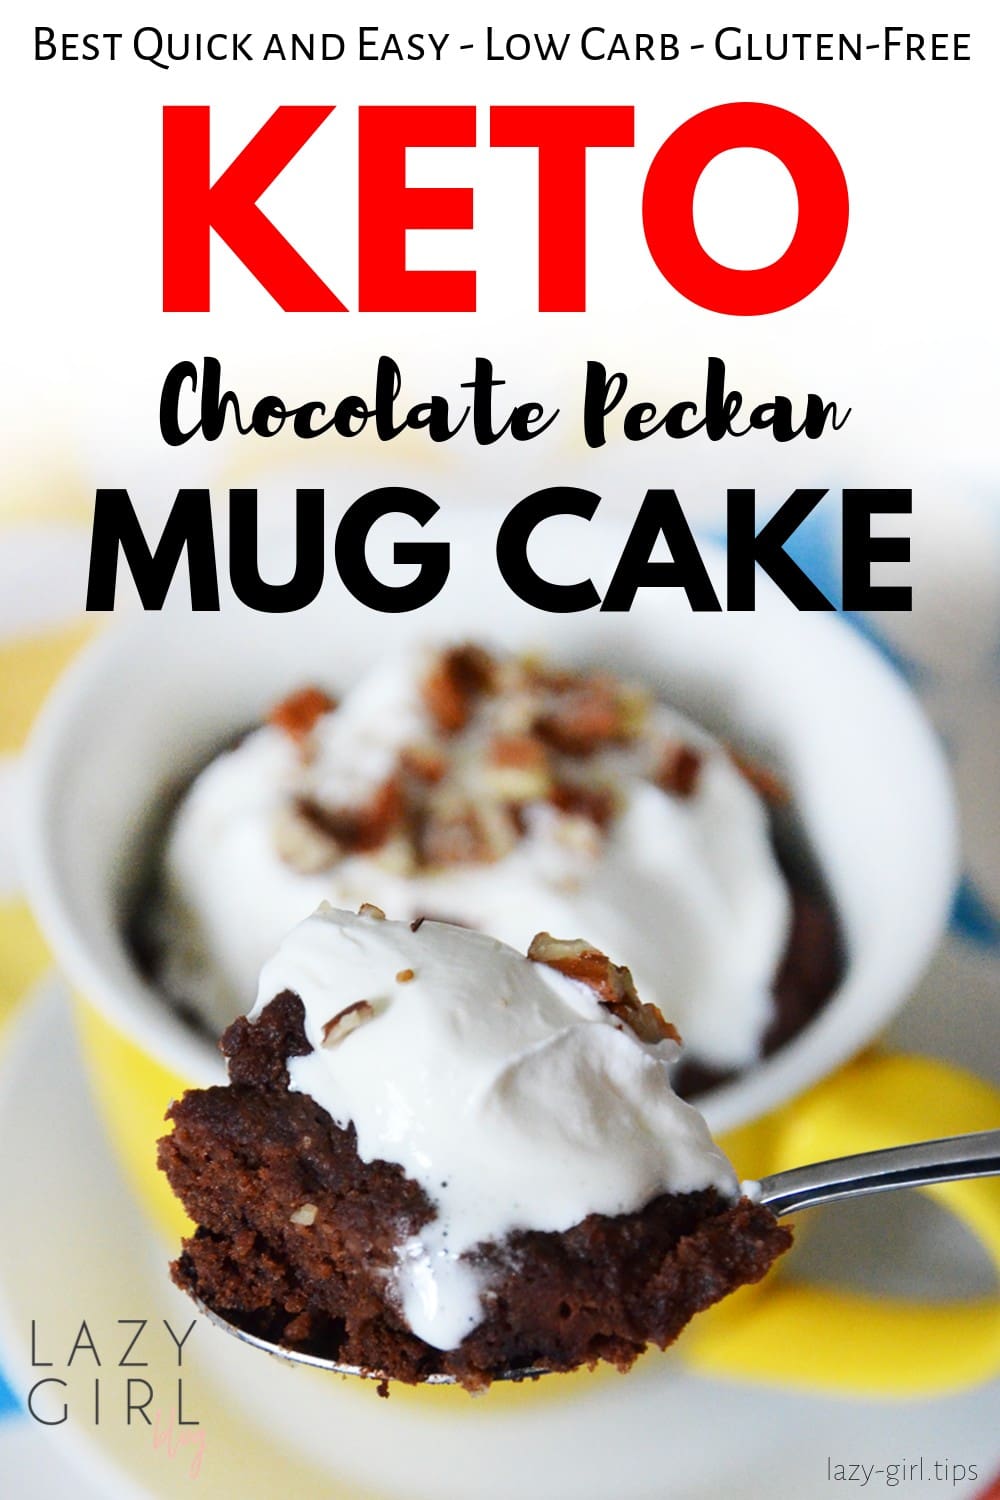 Easy Keto Chocolate Pecan Mug Cake For Two - Low Carb - Gluten Free